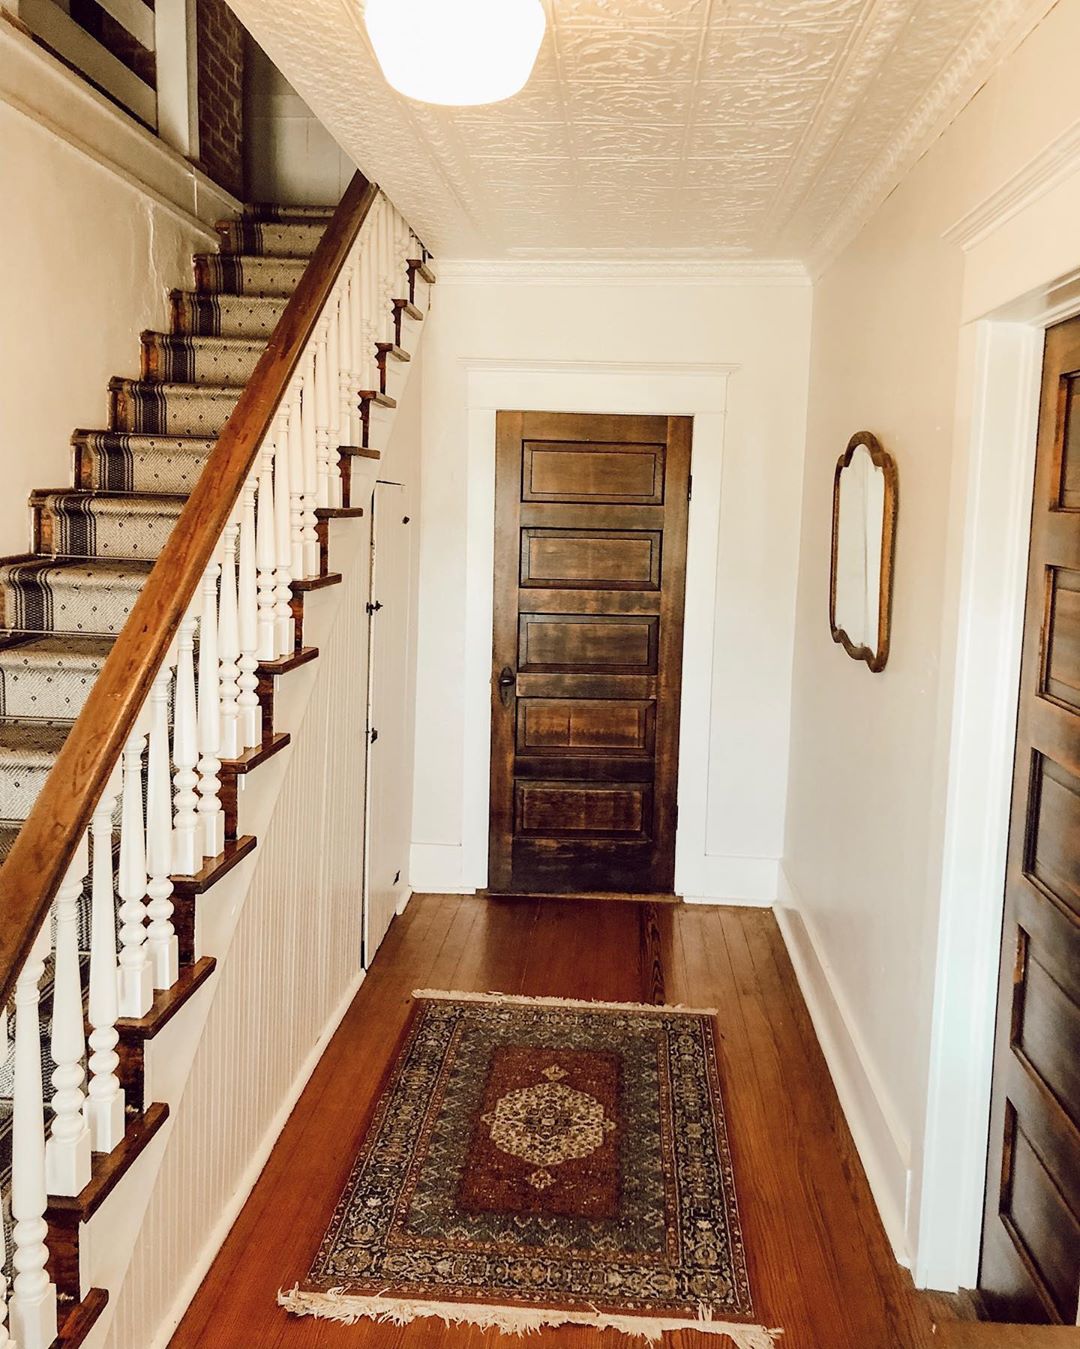 Entryway in old home. Photo by Instagram user @laurastewartblog